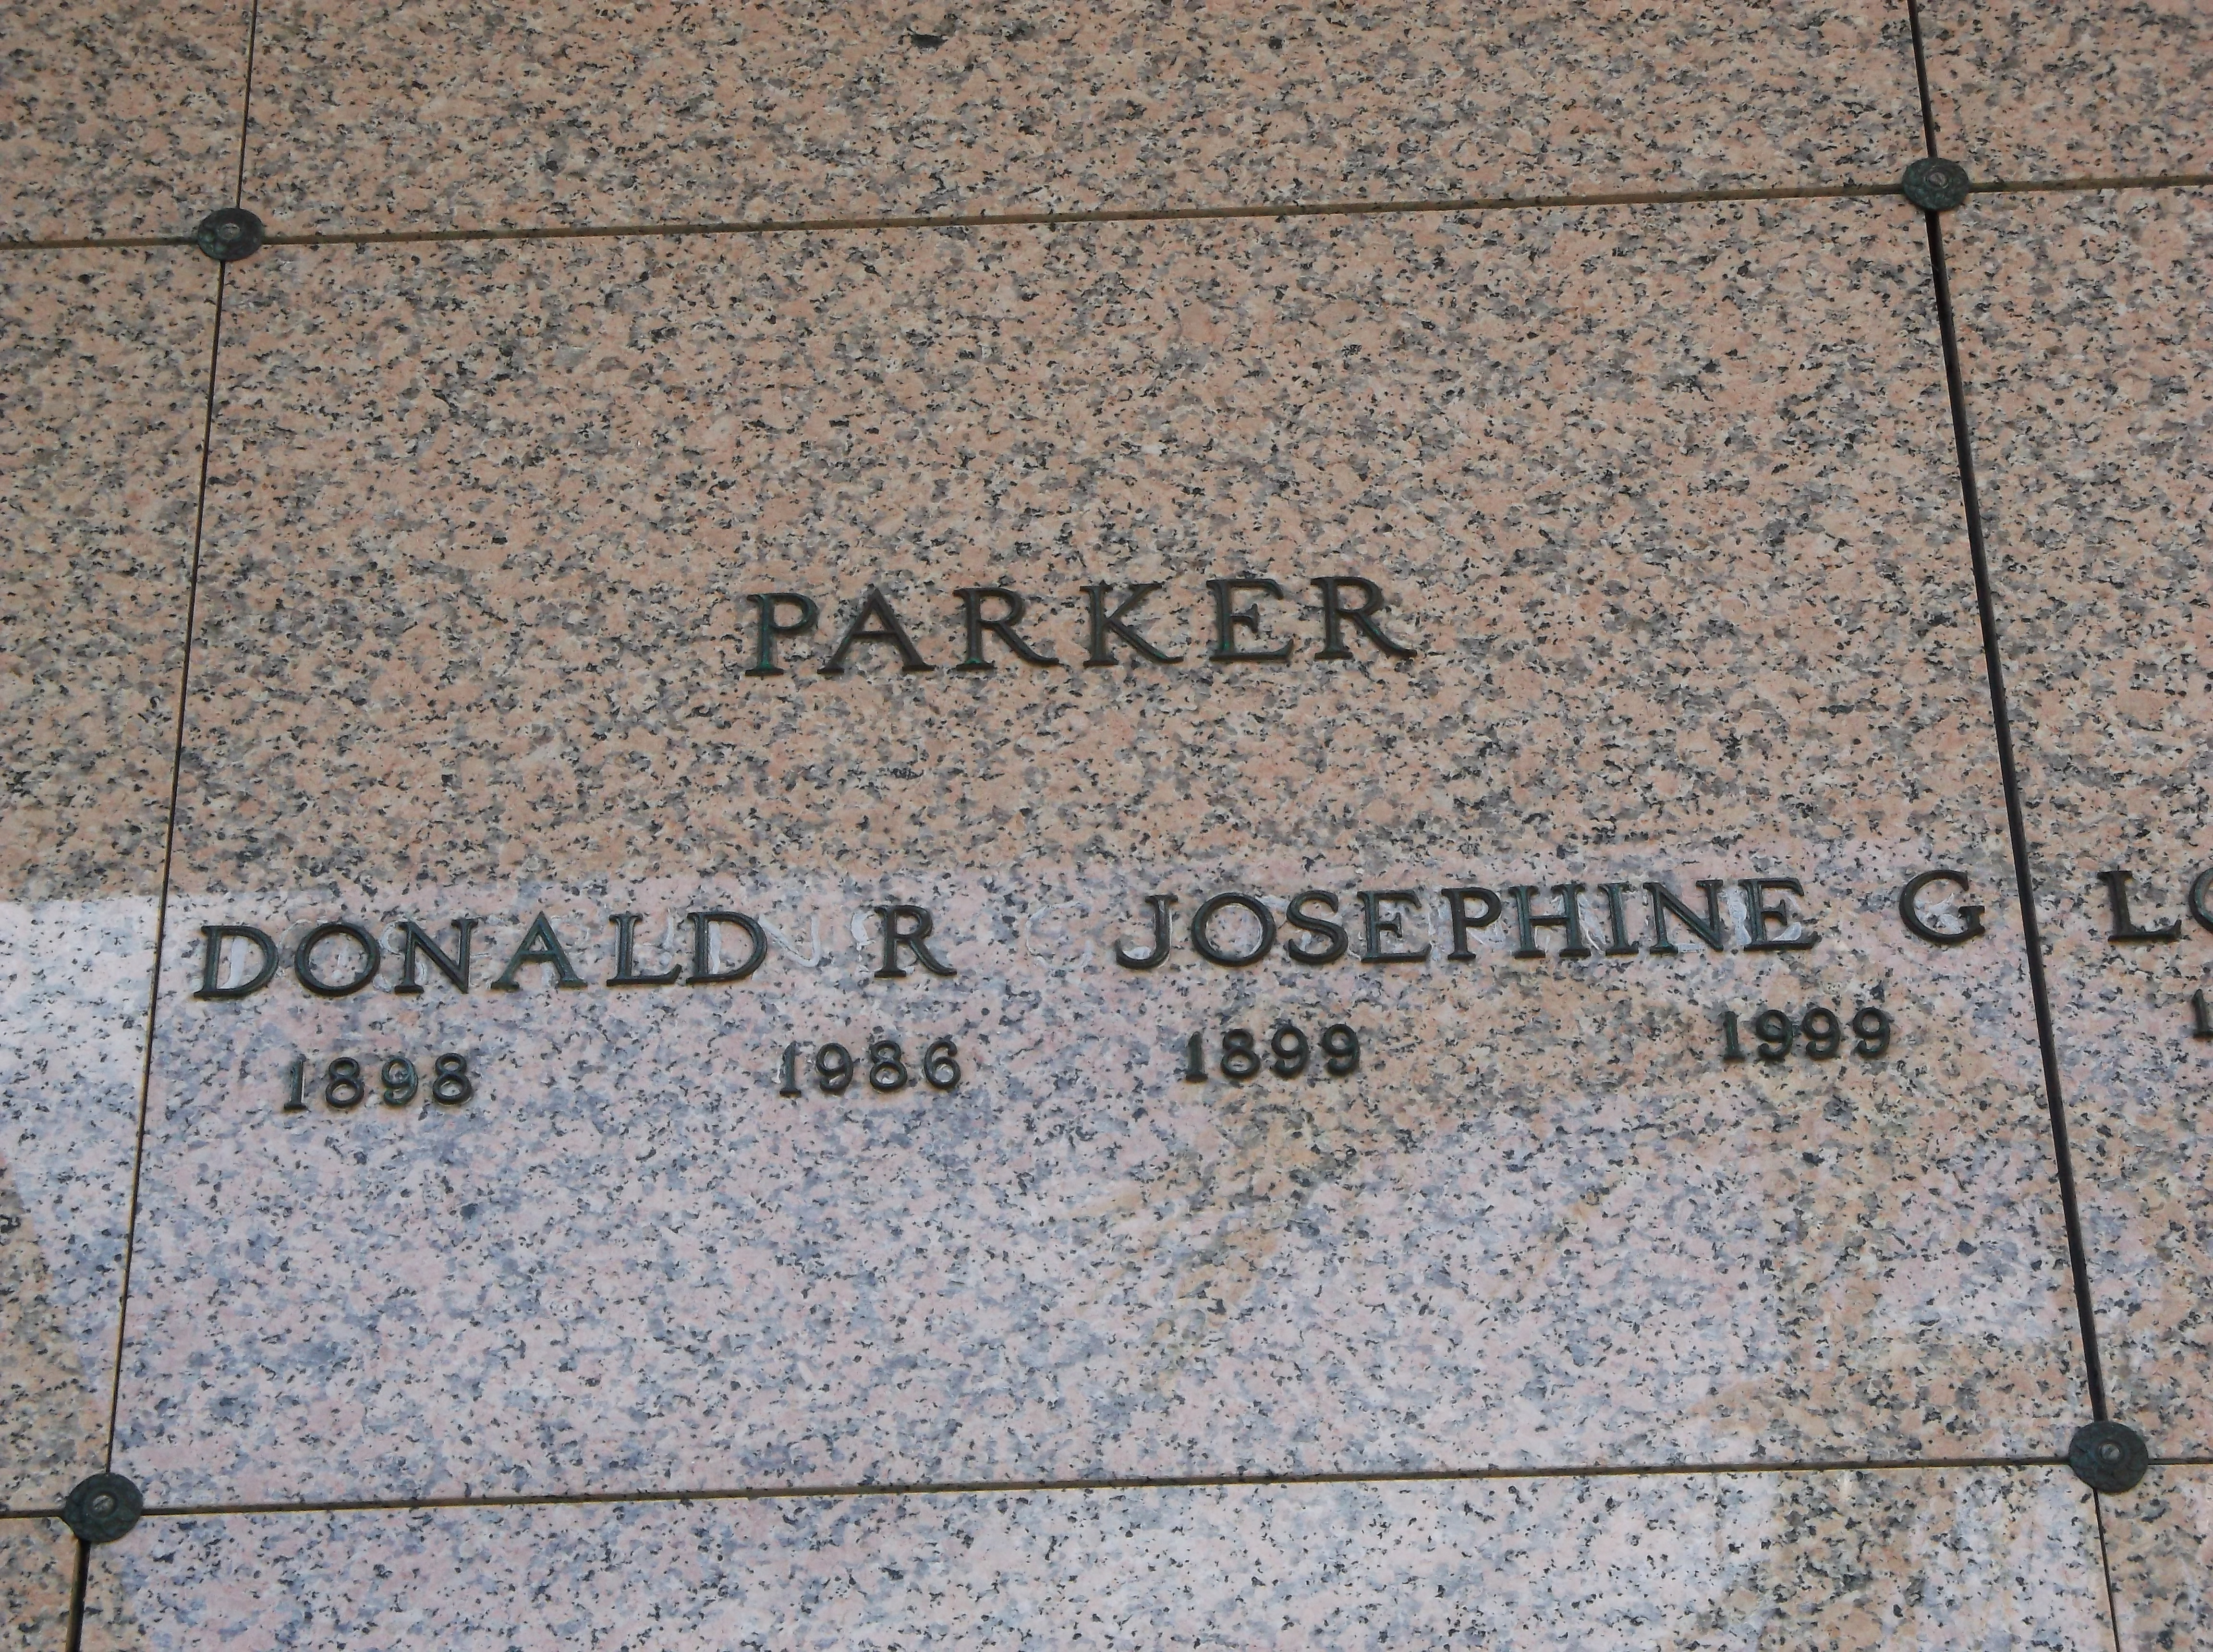 Josephine G Parker